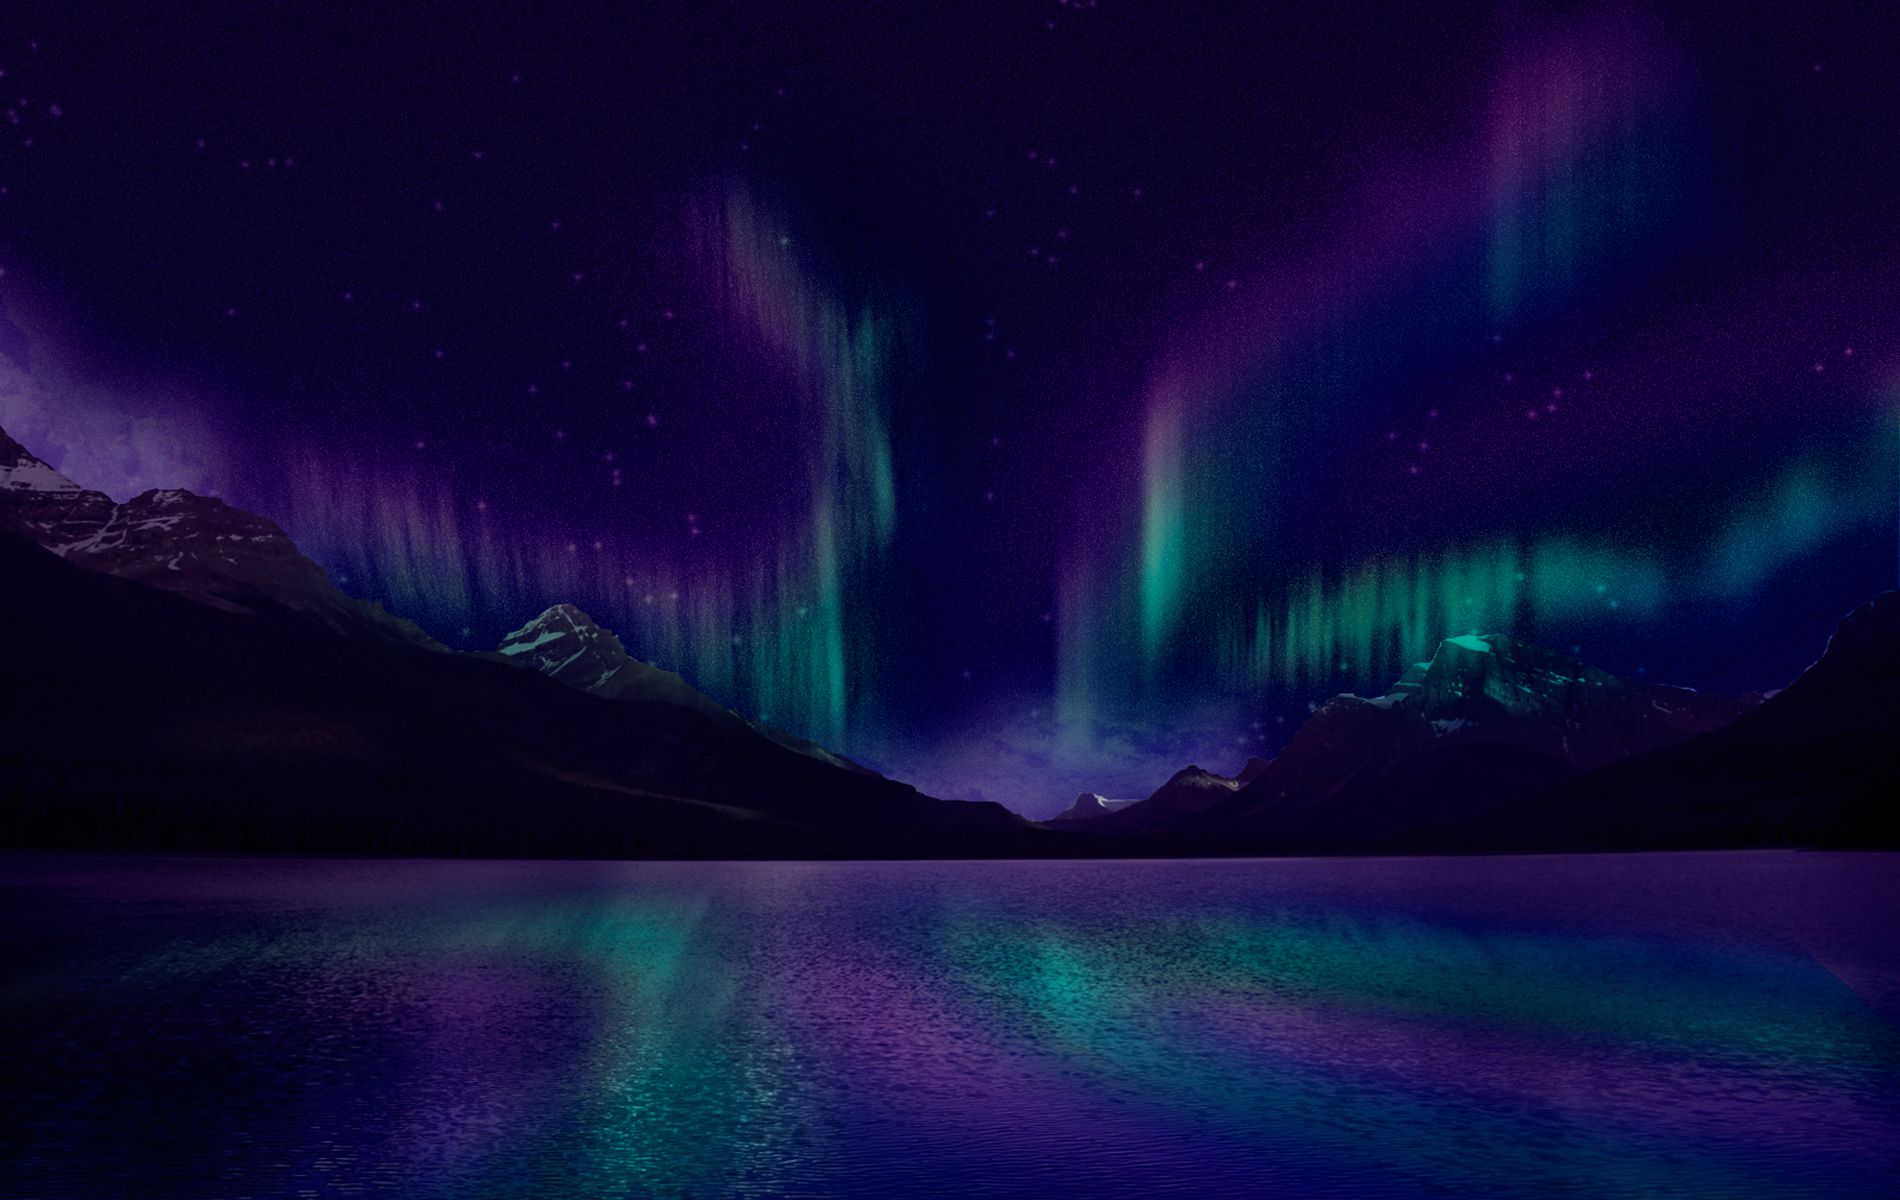 Fondos de pantalla de auroras boreales - FondosMil